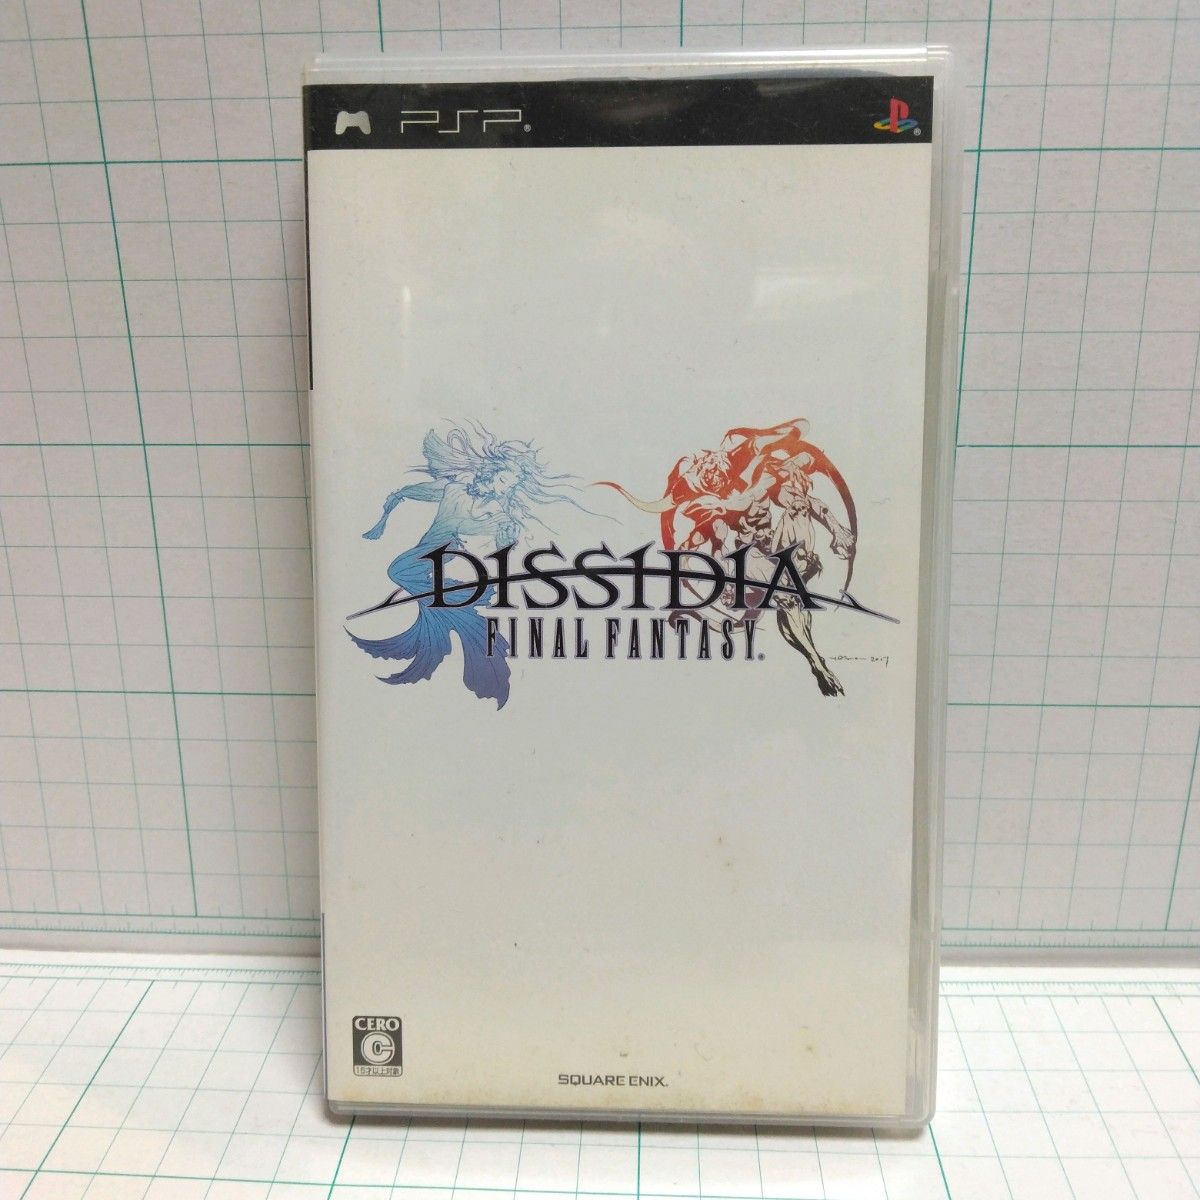 【PSP】 ディシディア ファイナルファンタジー PSPソフト